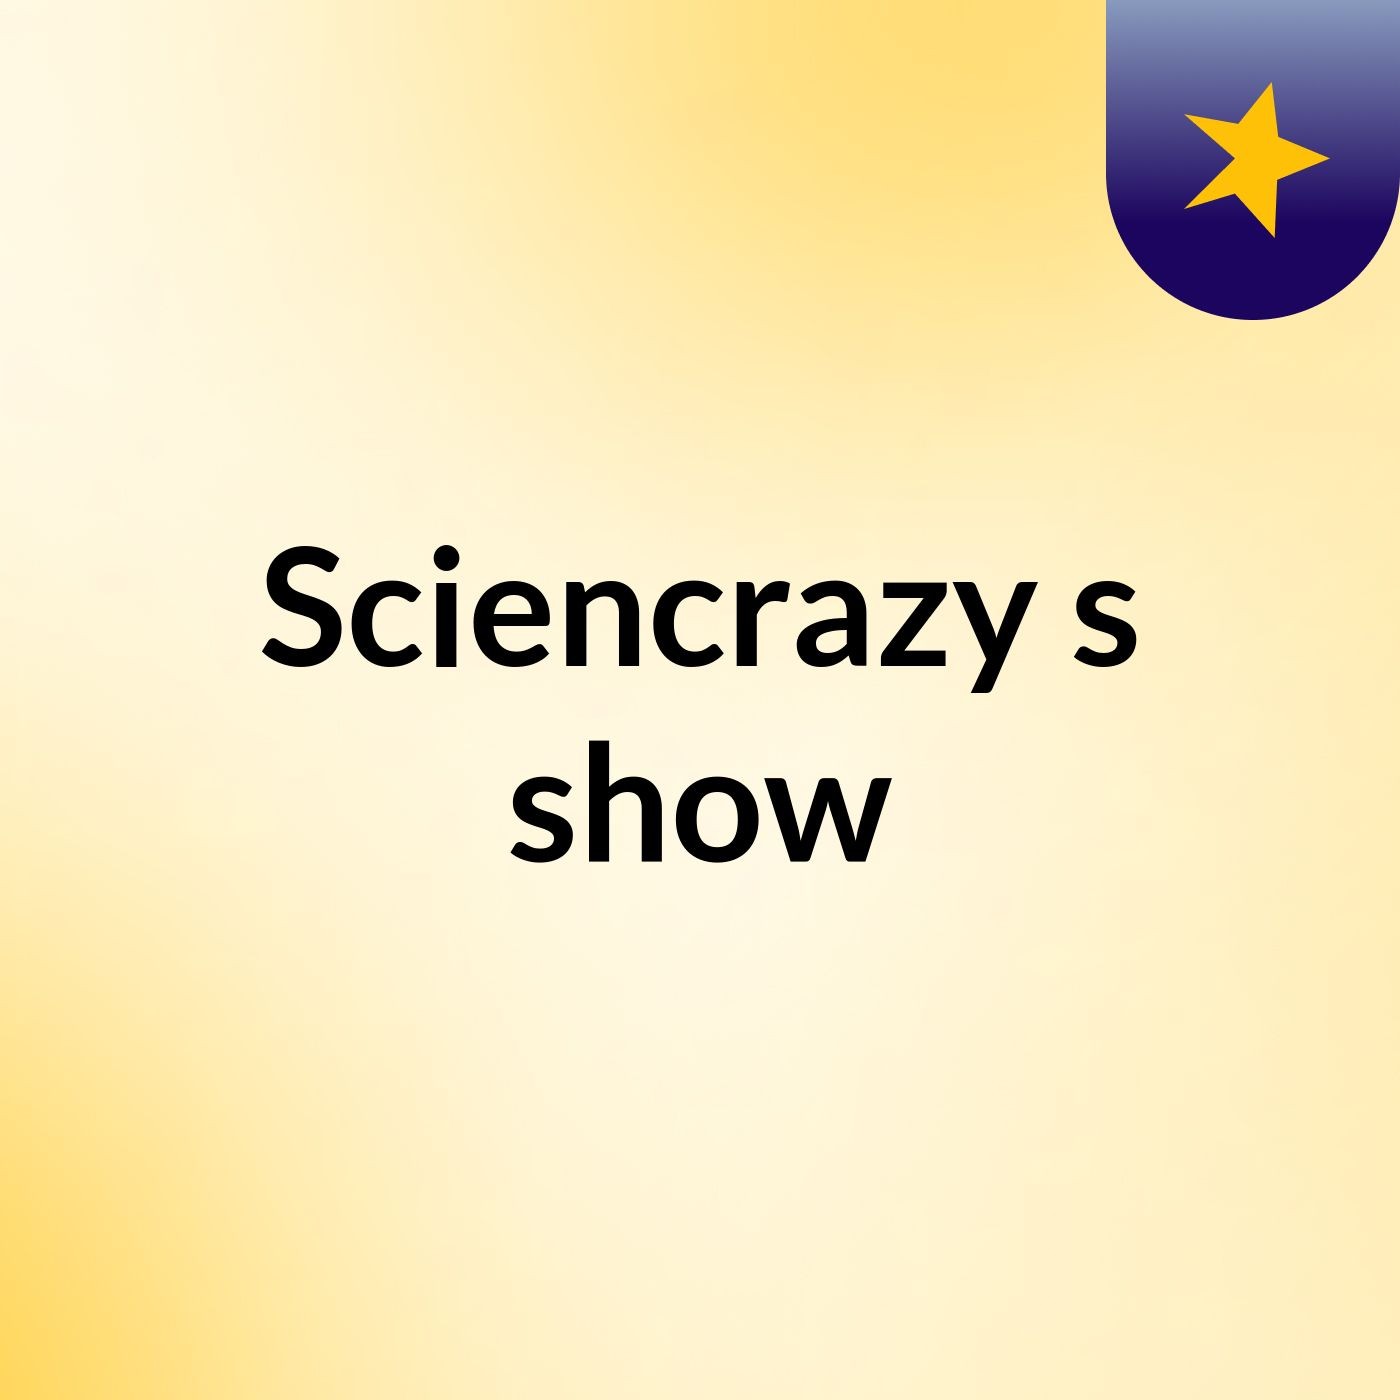 Sciencrazy's show